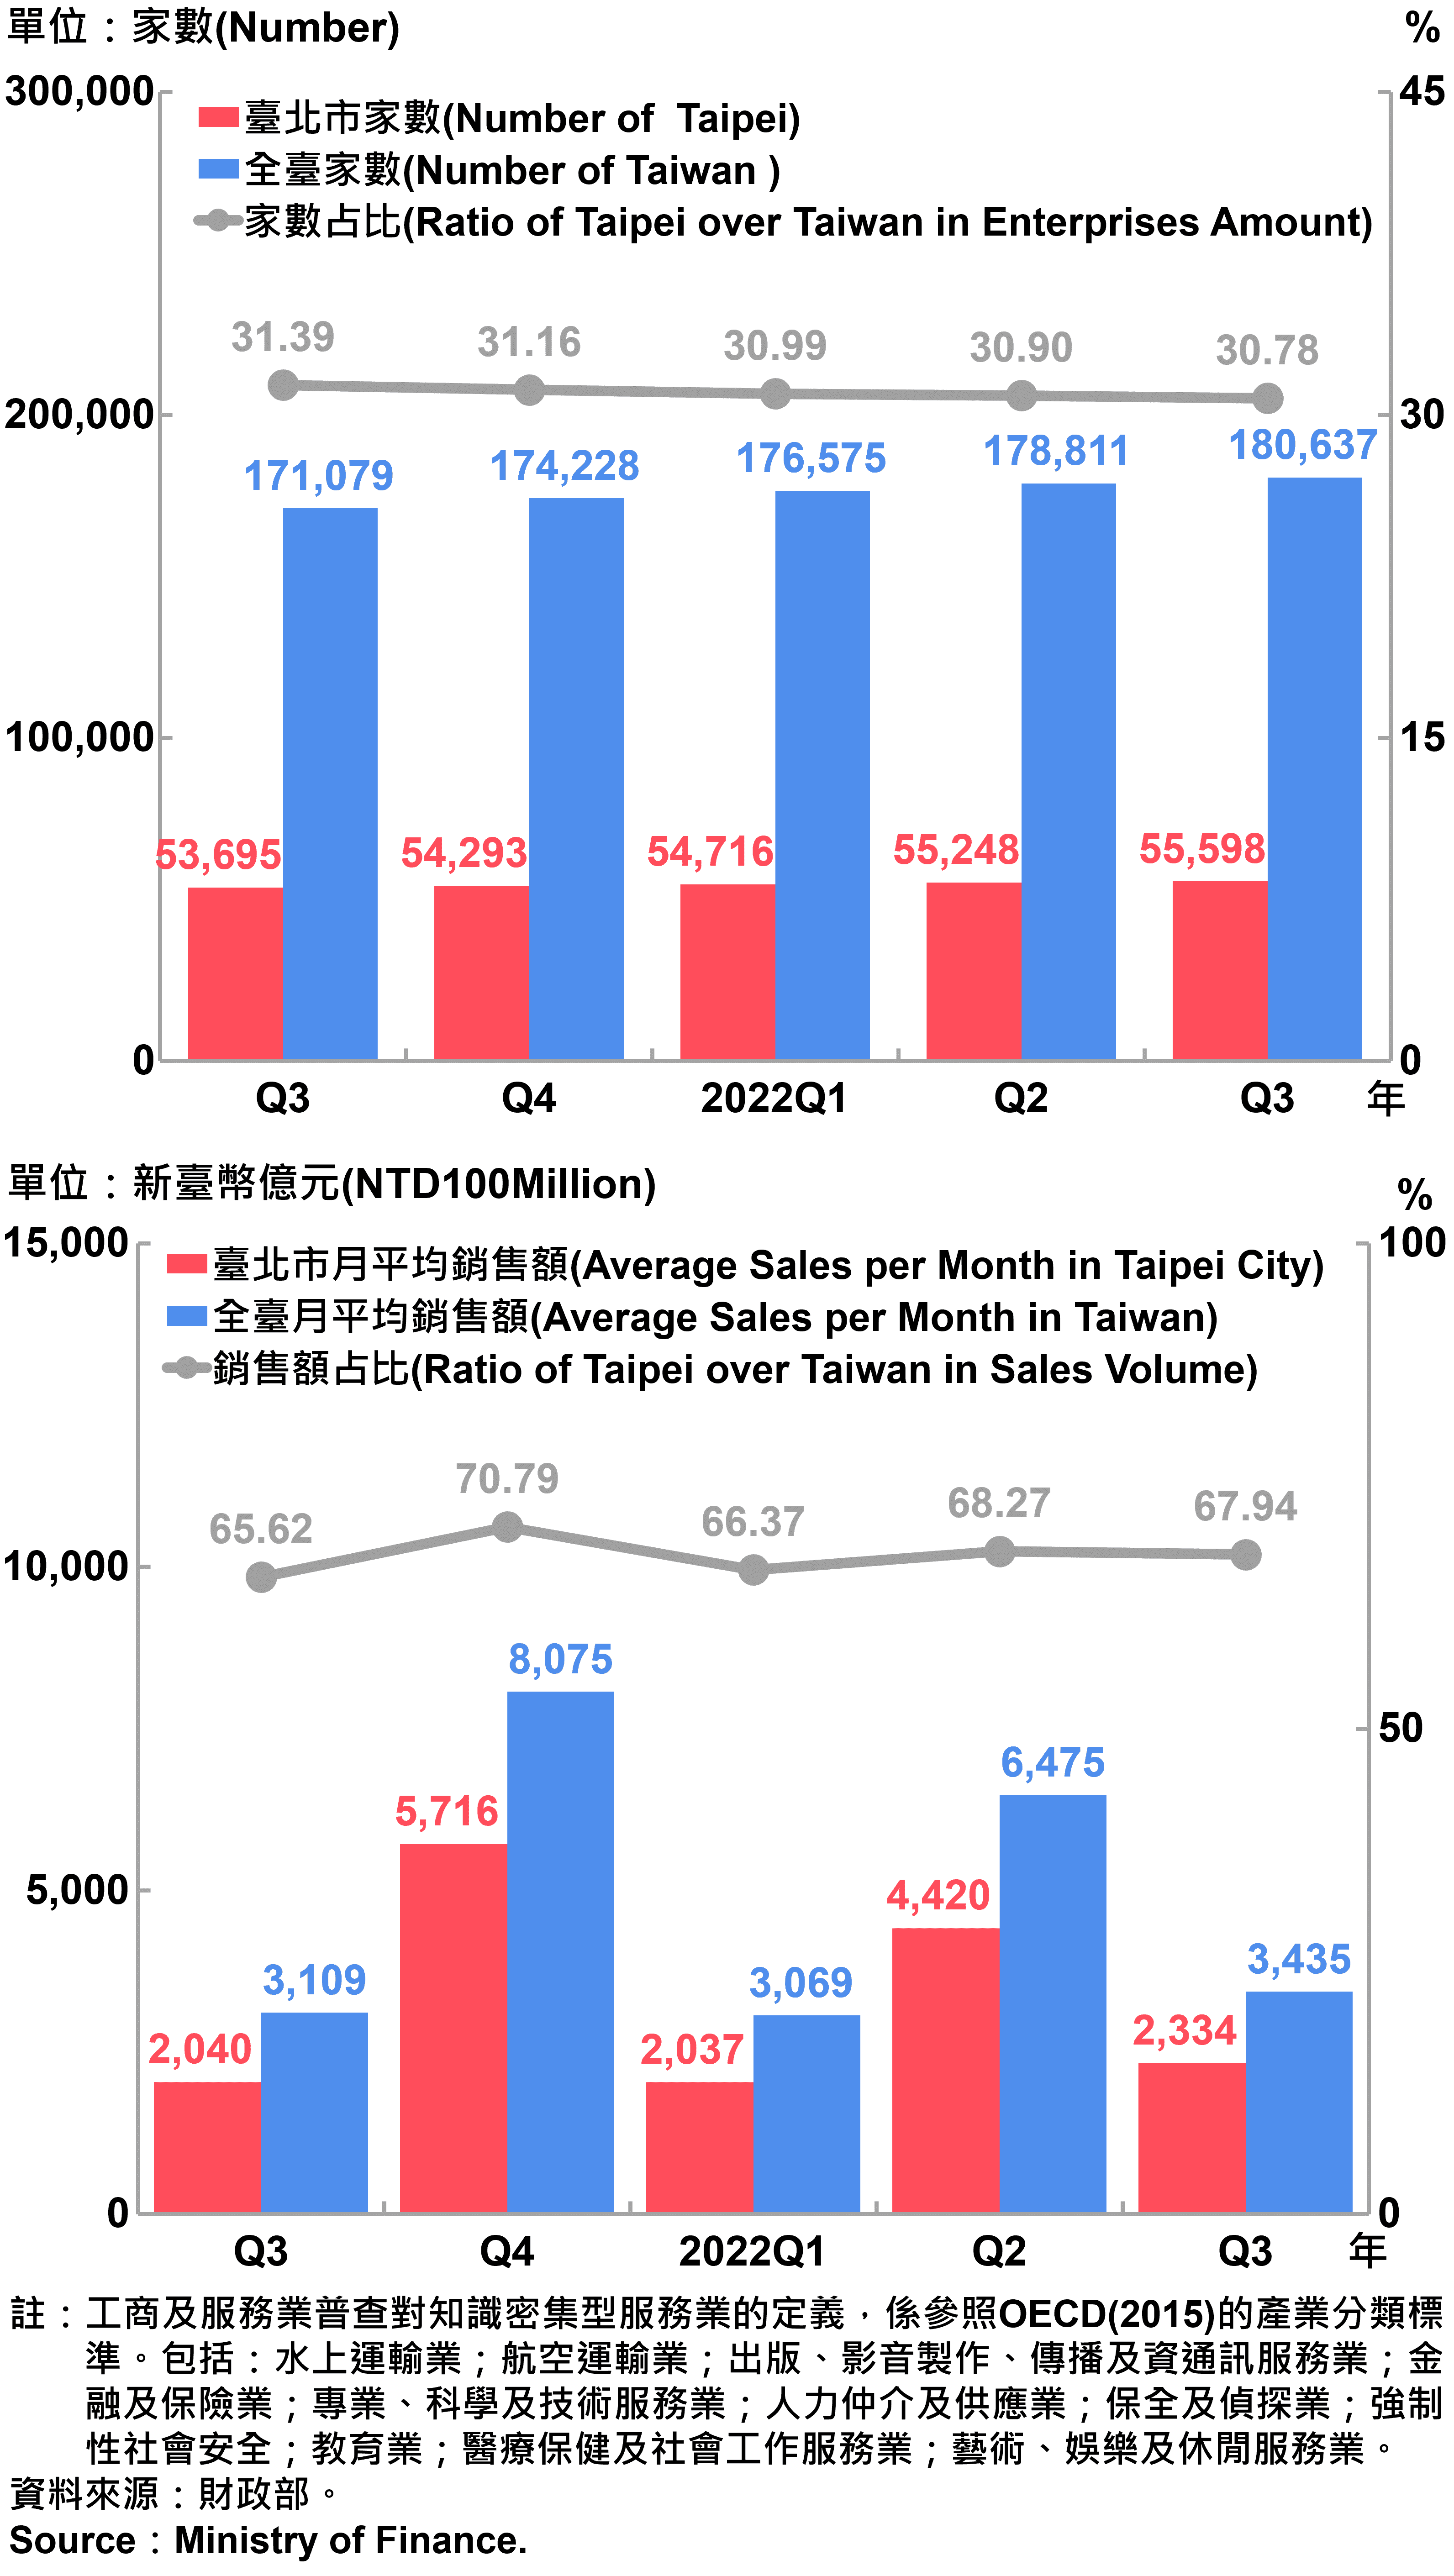 臺北市知識密集型服務業之家數及銷售額—2022Q3 Statistics Knowledge Intensive Service Industry in Taipei City—2022Q3